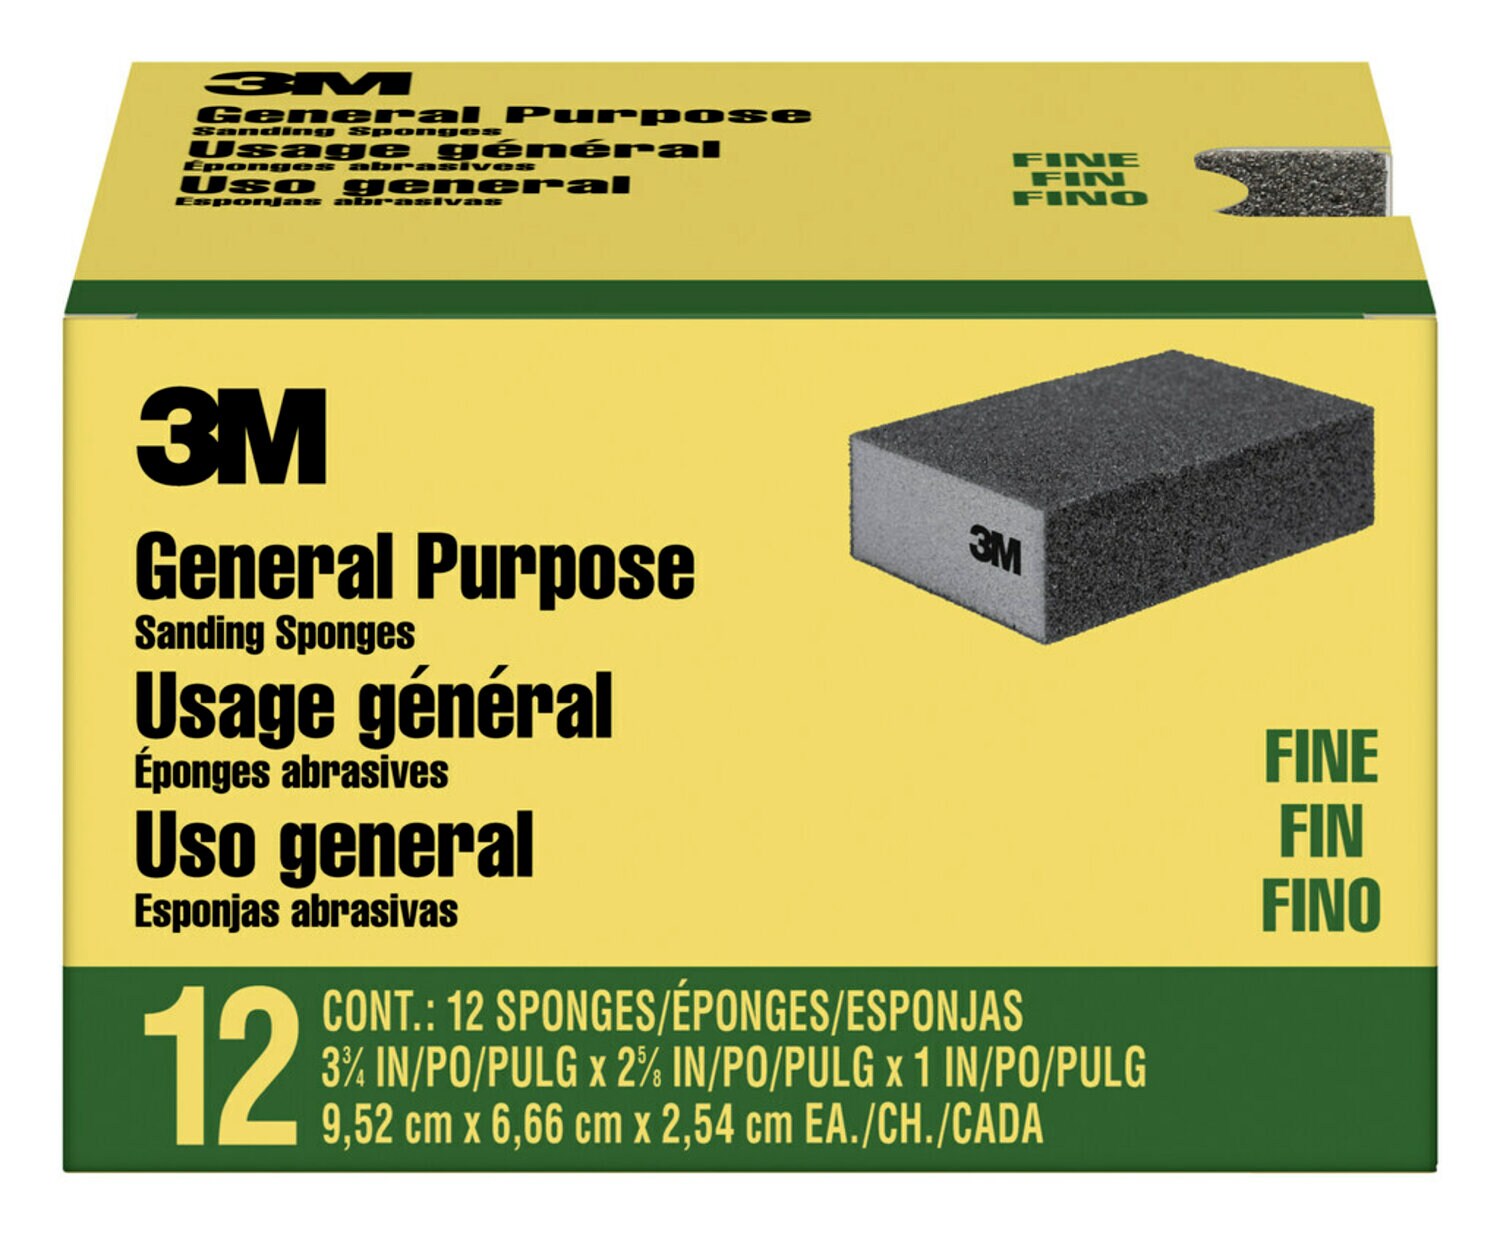 7100241249 - 3M General Purpose Sanding Sponge CP001-12P, Block, 3 3/4 in x 2 5/8 in x 1 in, Fine, 12/pk, 4 pks/cs